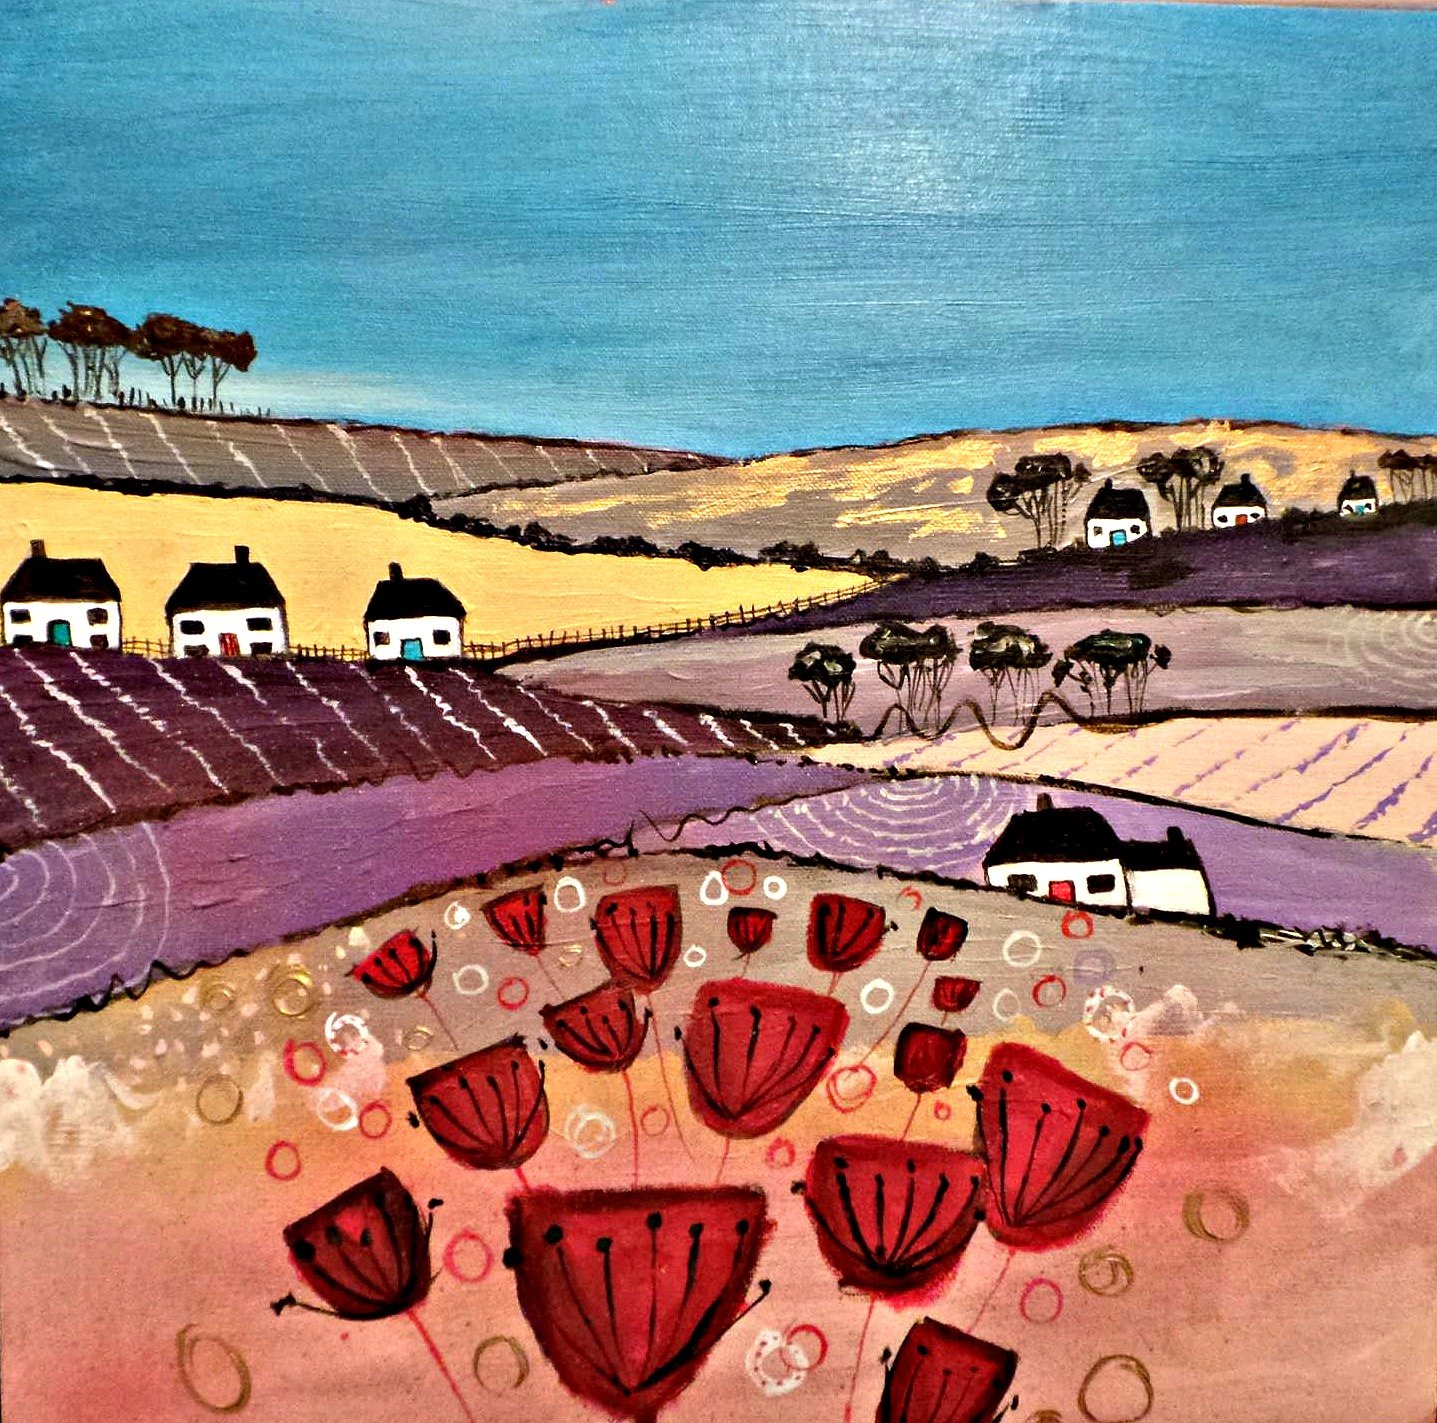 The Village by Caroline Duncan